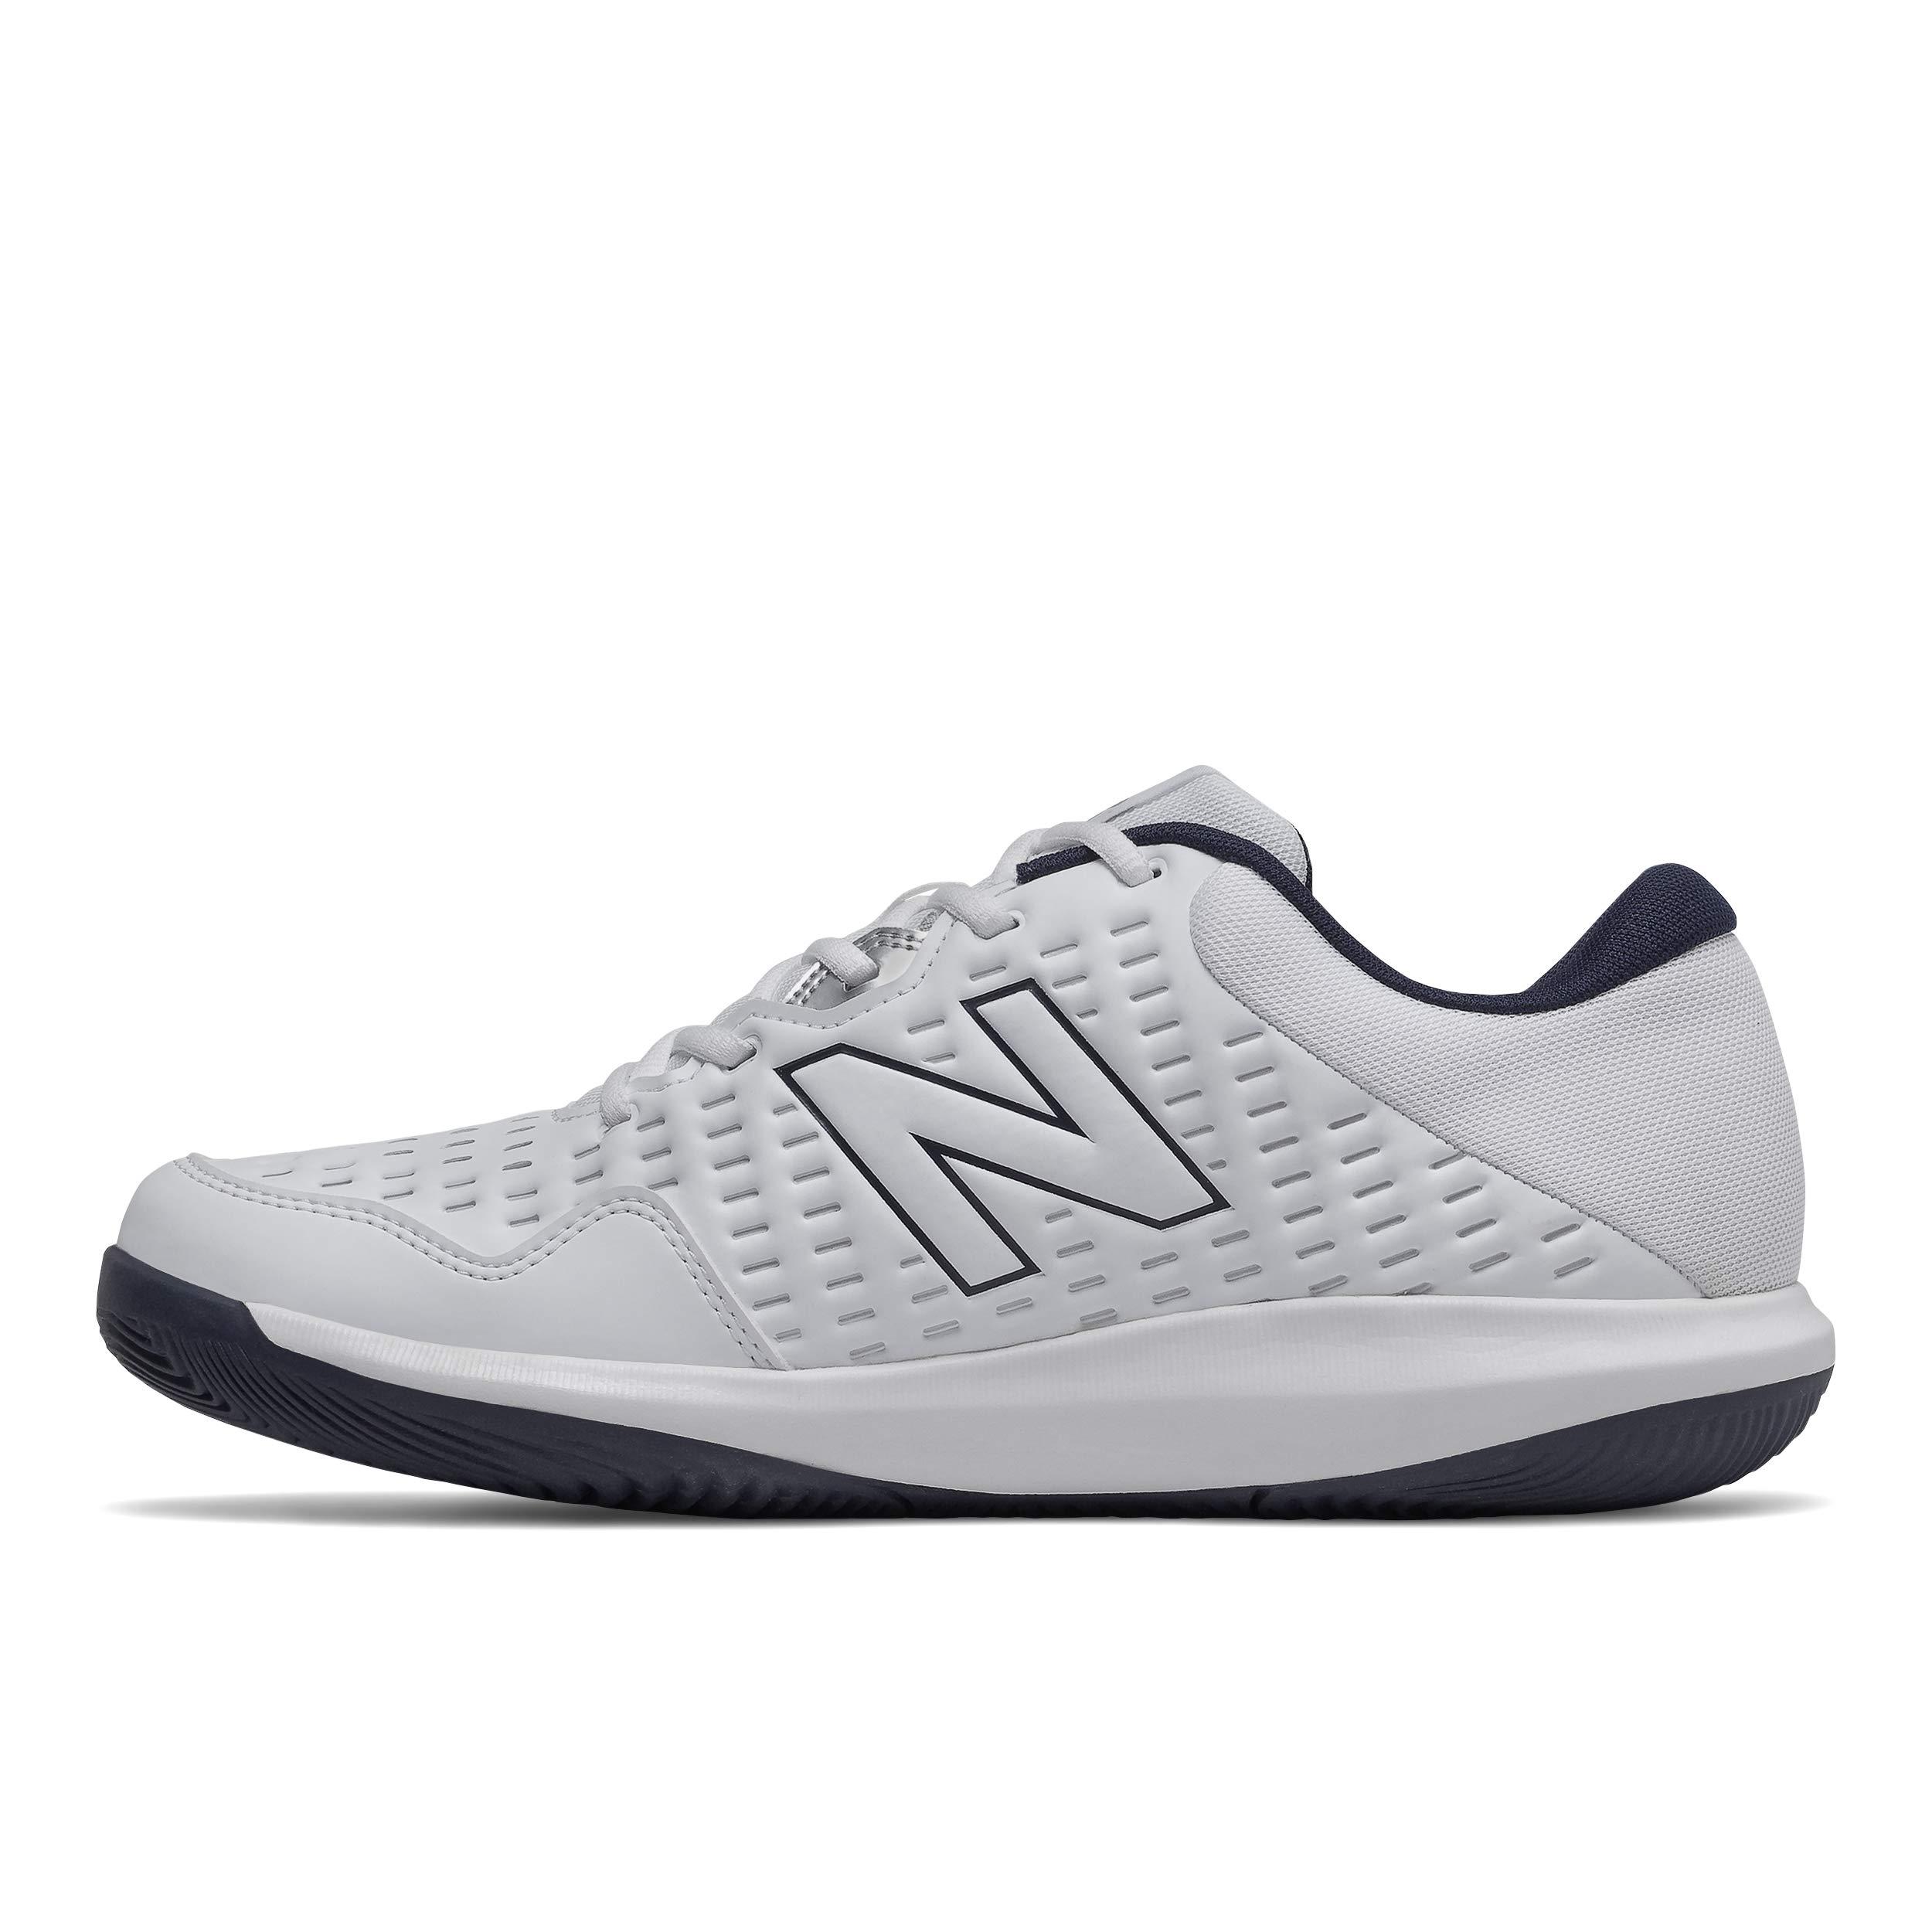 New Balance 696 V4 Hard Court Tennis Shoe in Blue | Lyst